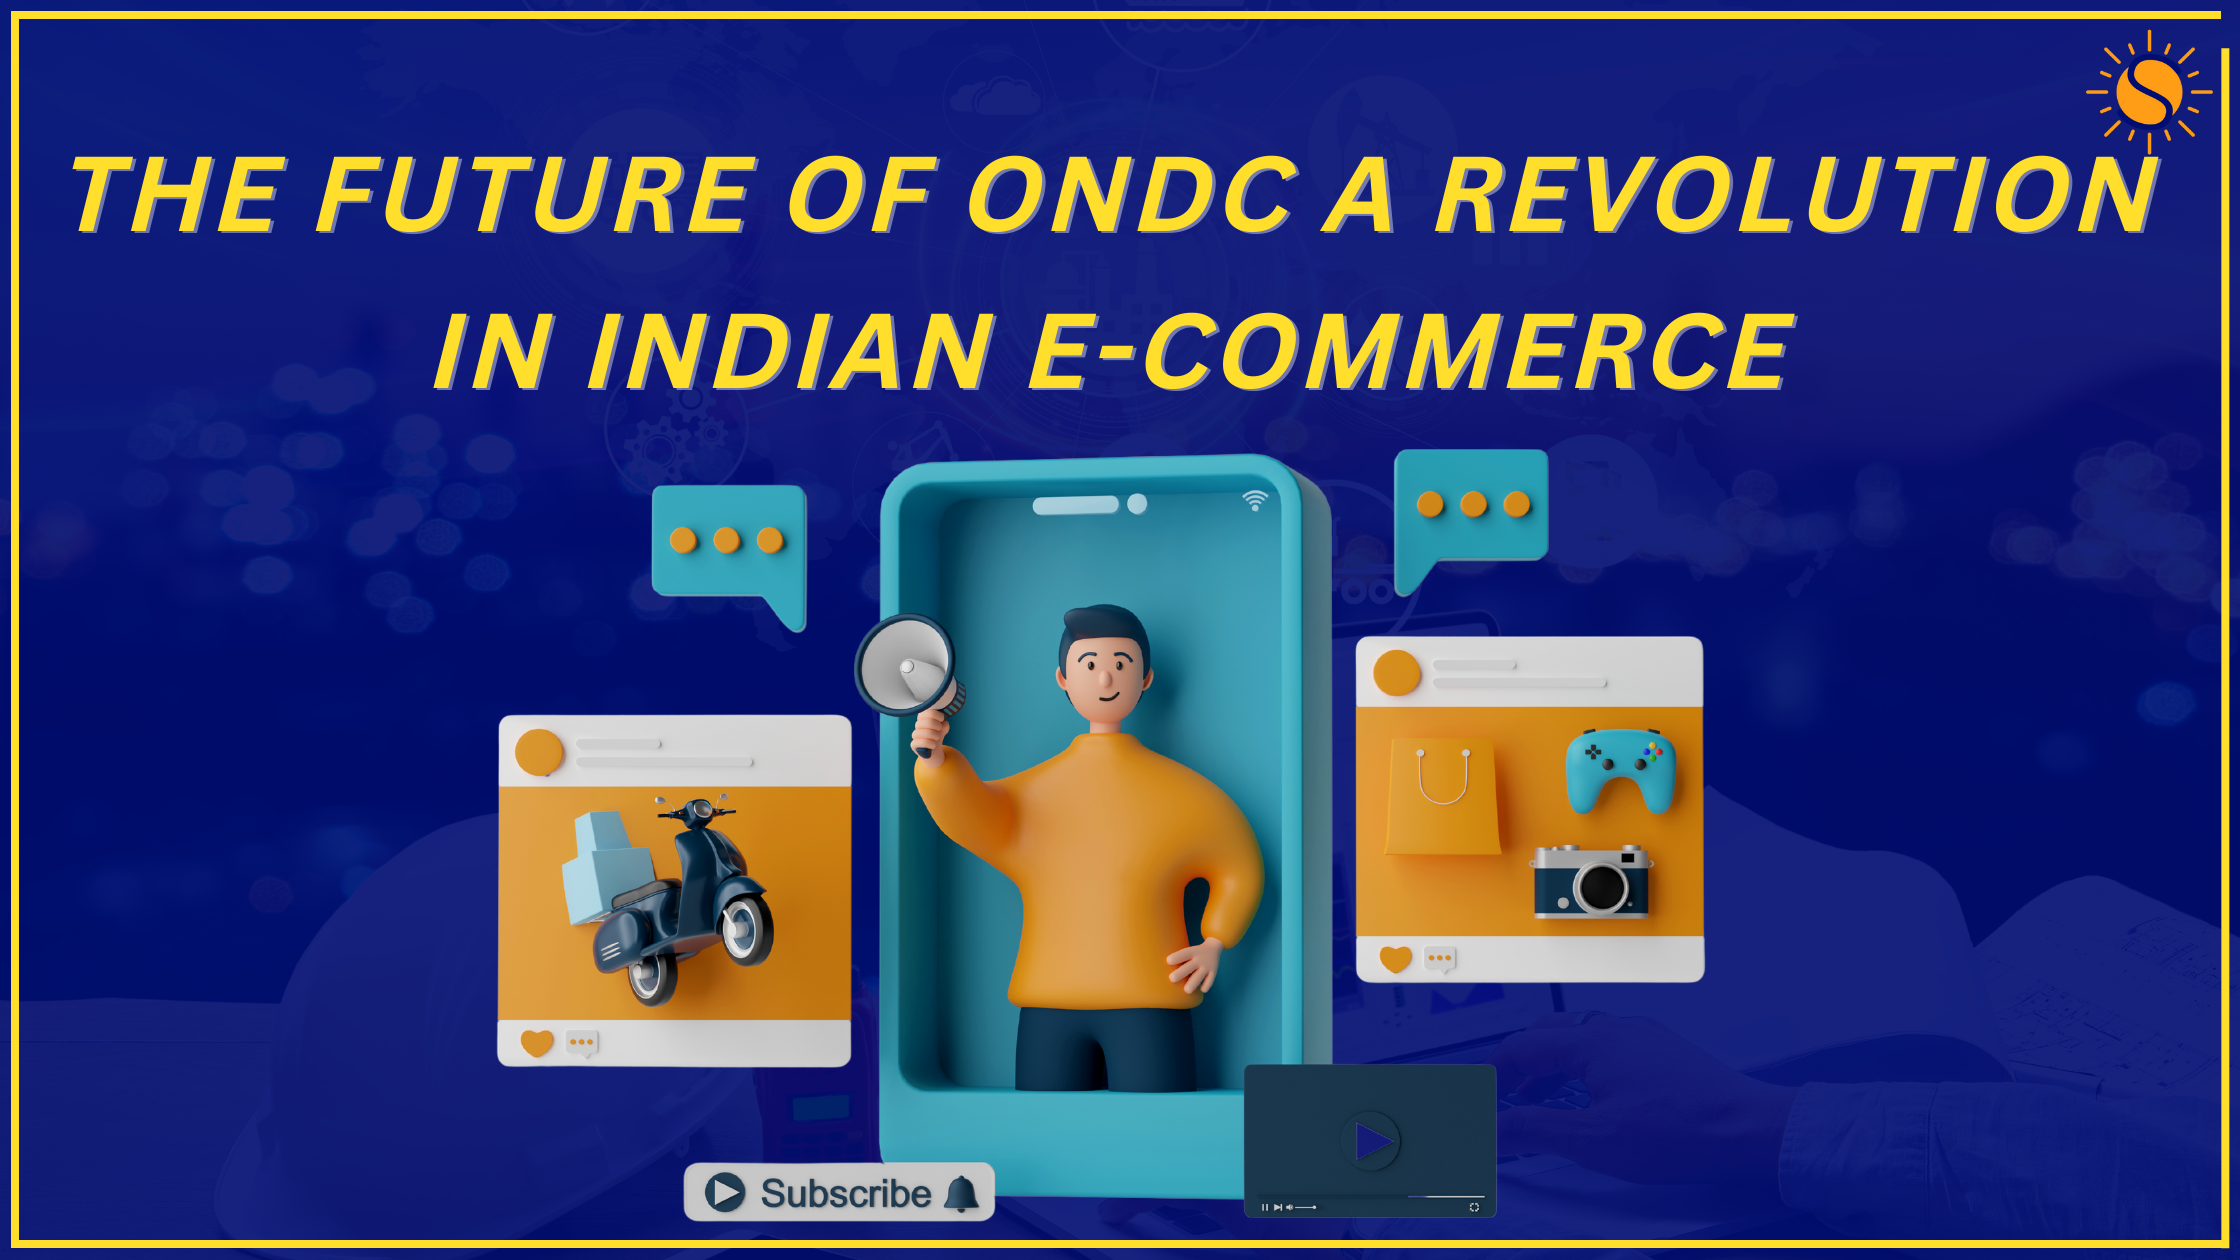 The Future of ONDC: A Revolution in Indian E-Commerce